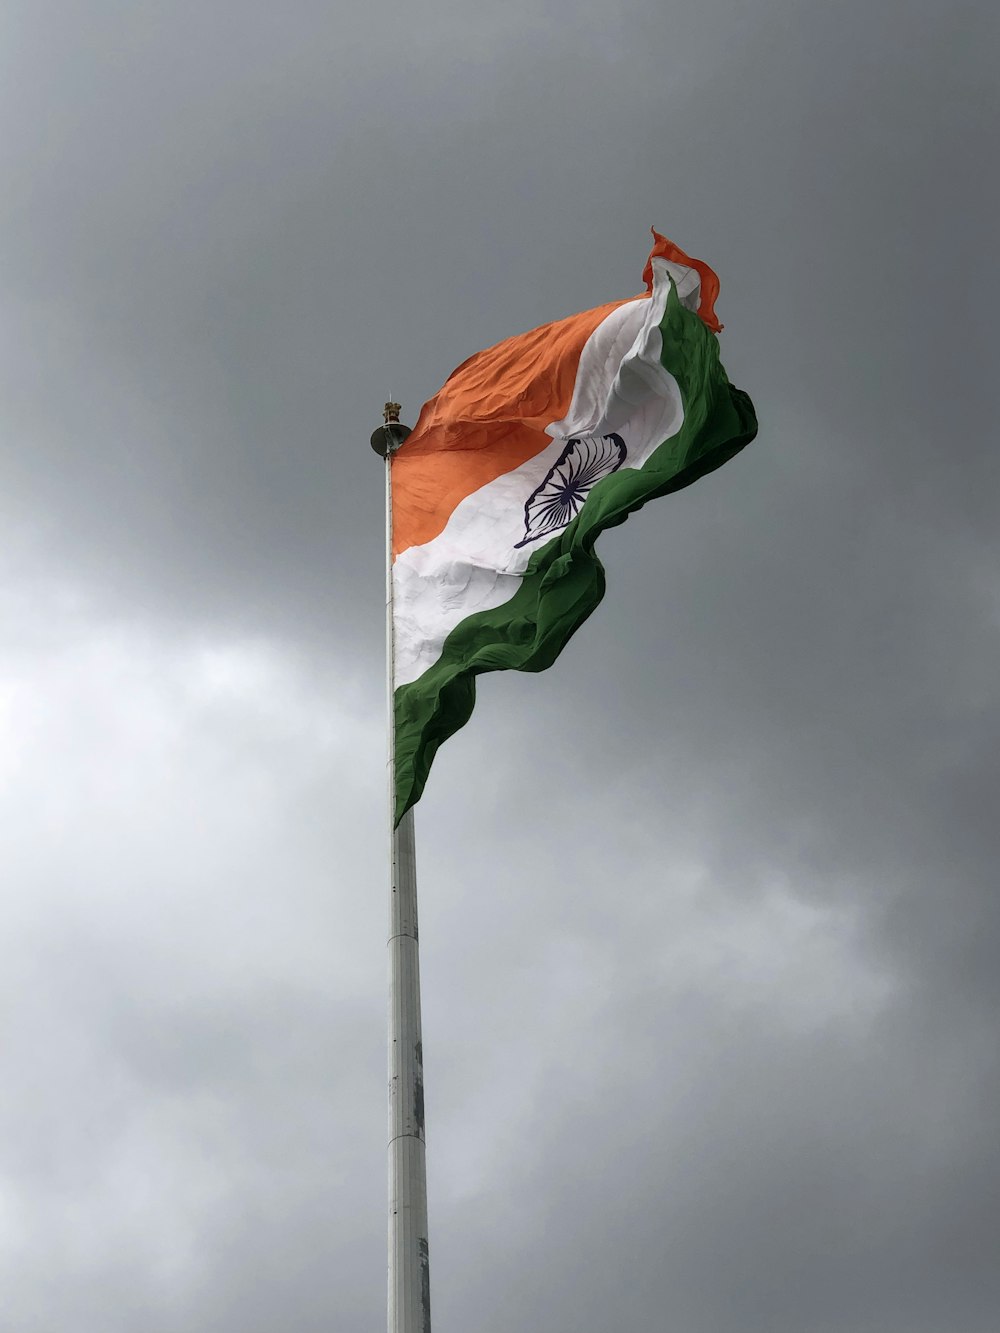 350+ Indian Flag Pictures | Download Free Images on Unsplash